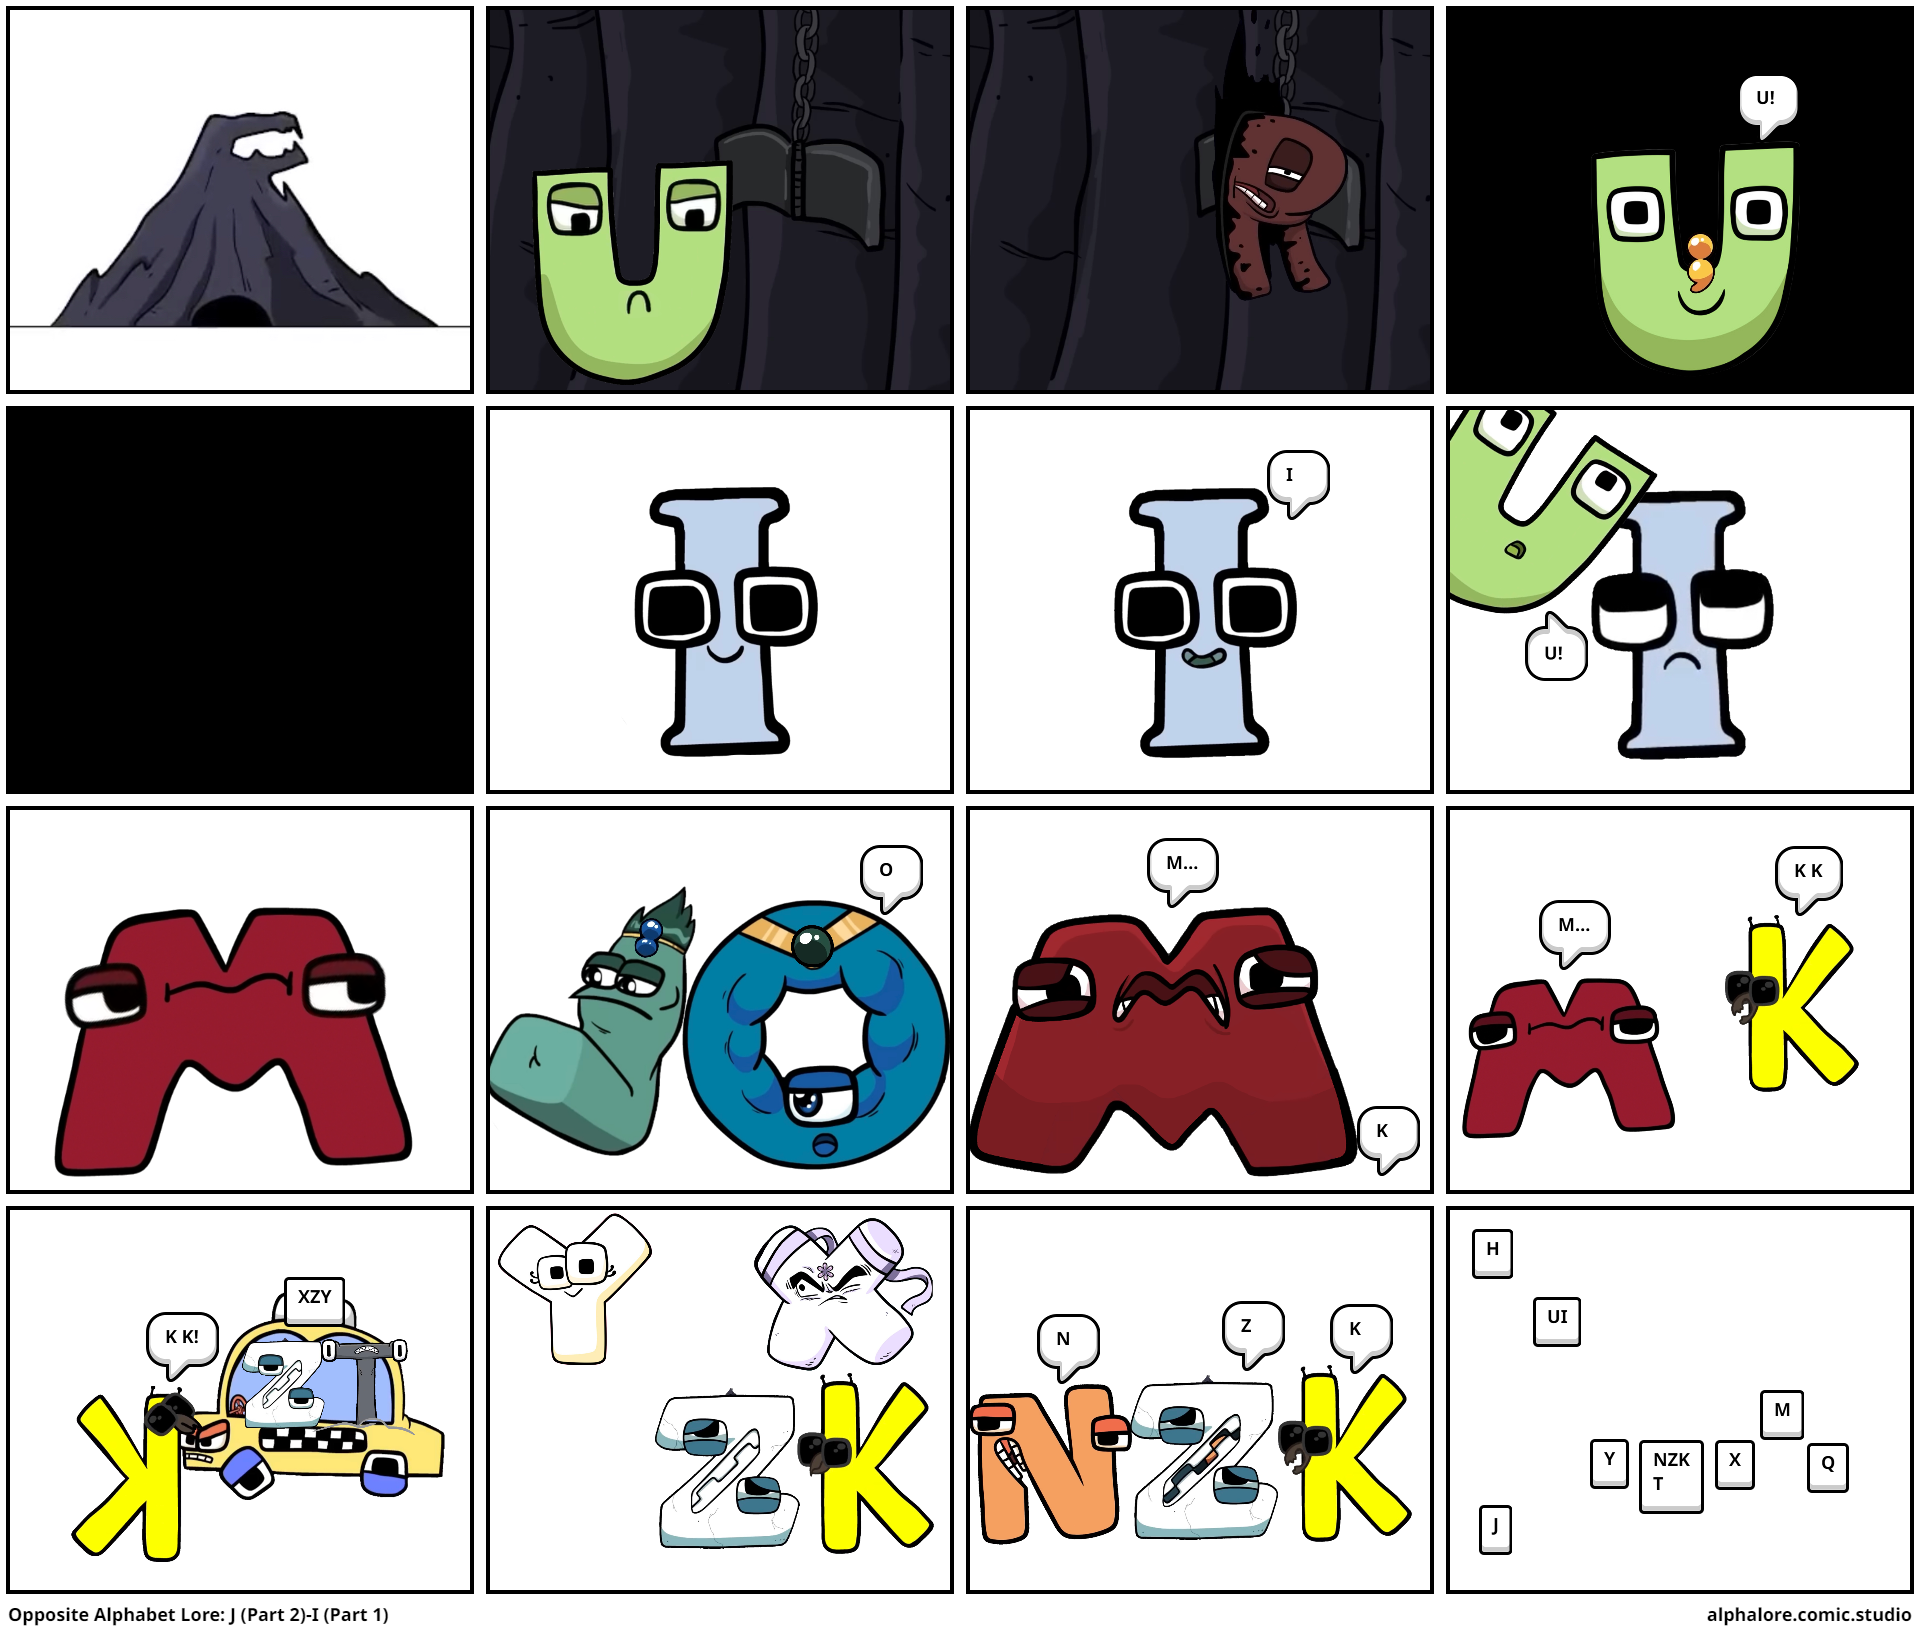 Opposite Alphabet Lore: mA (Part 2) - Comic Studio